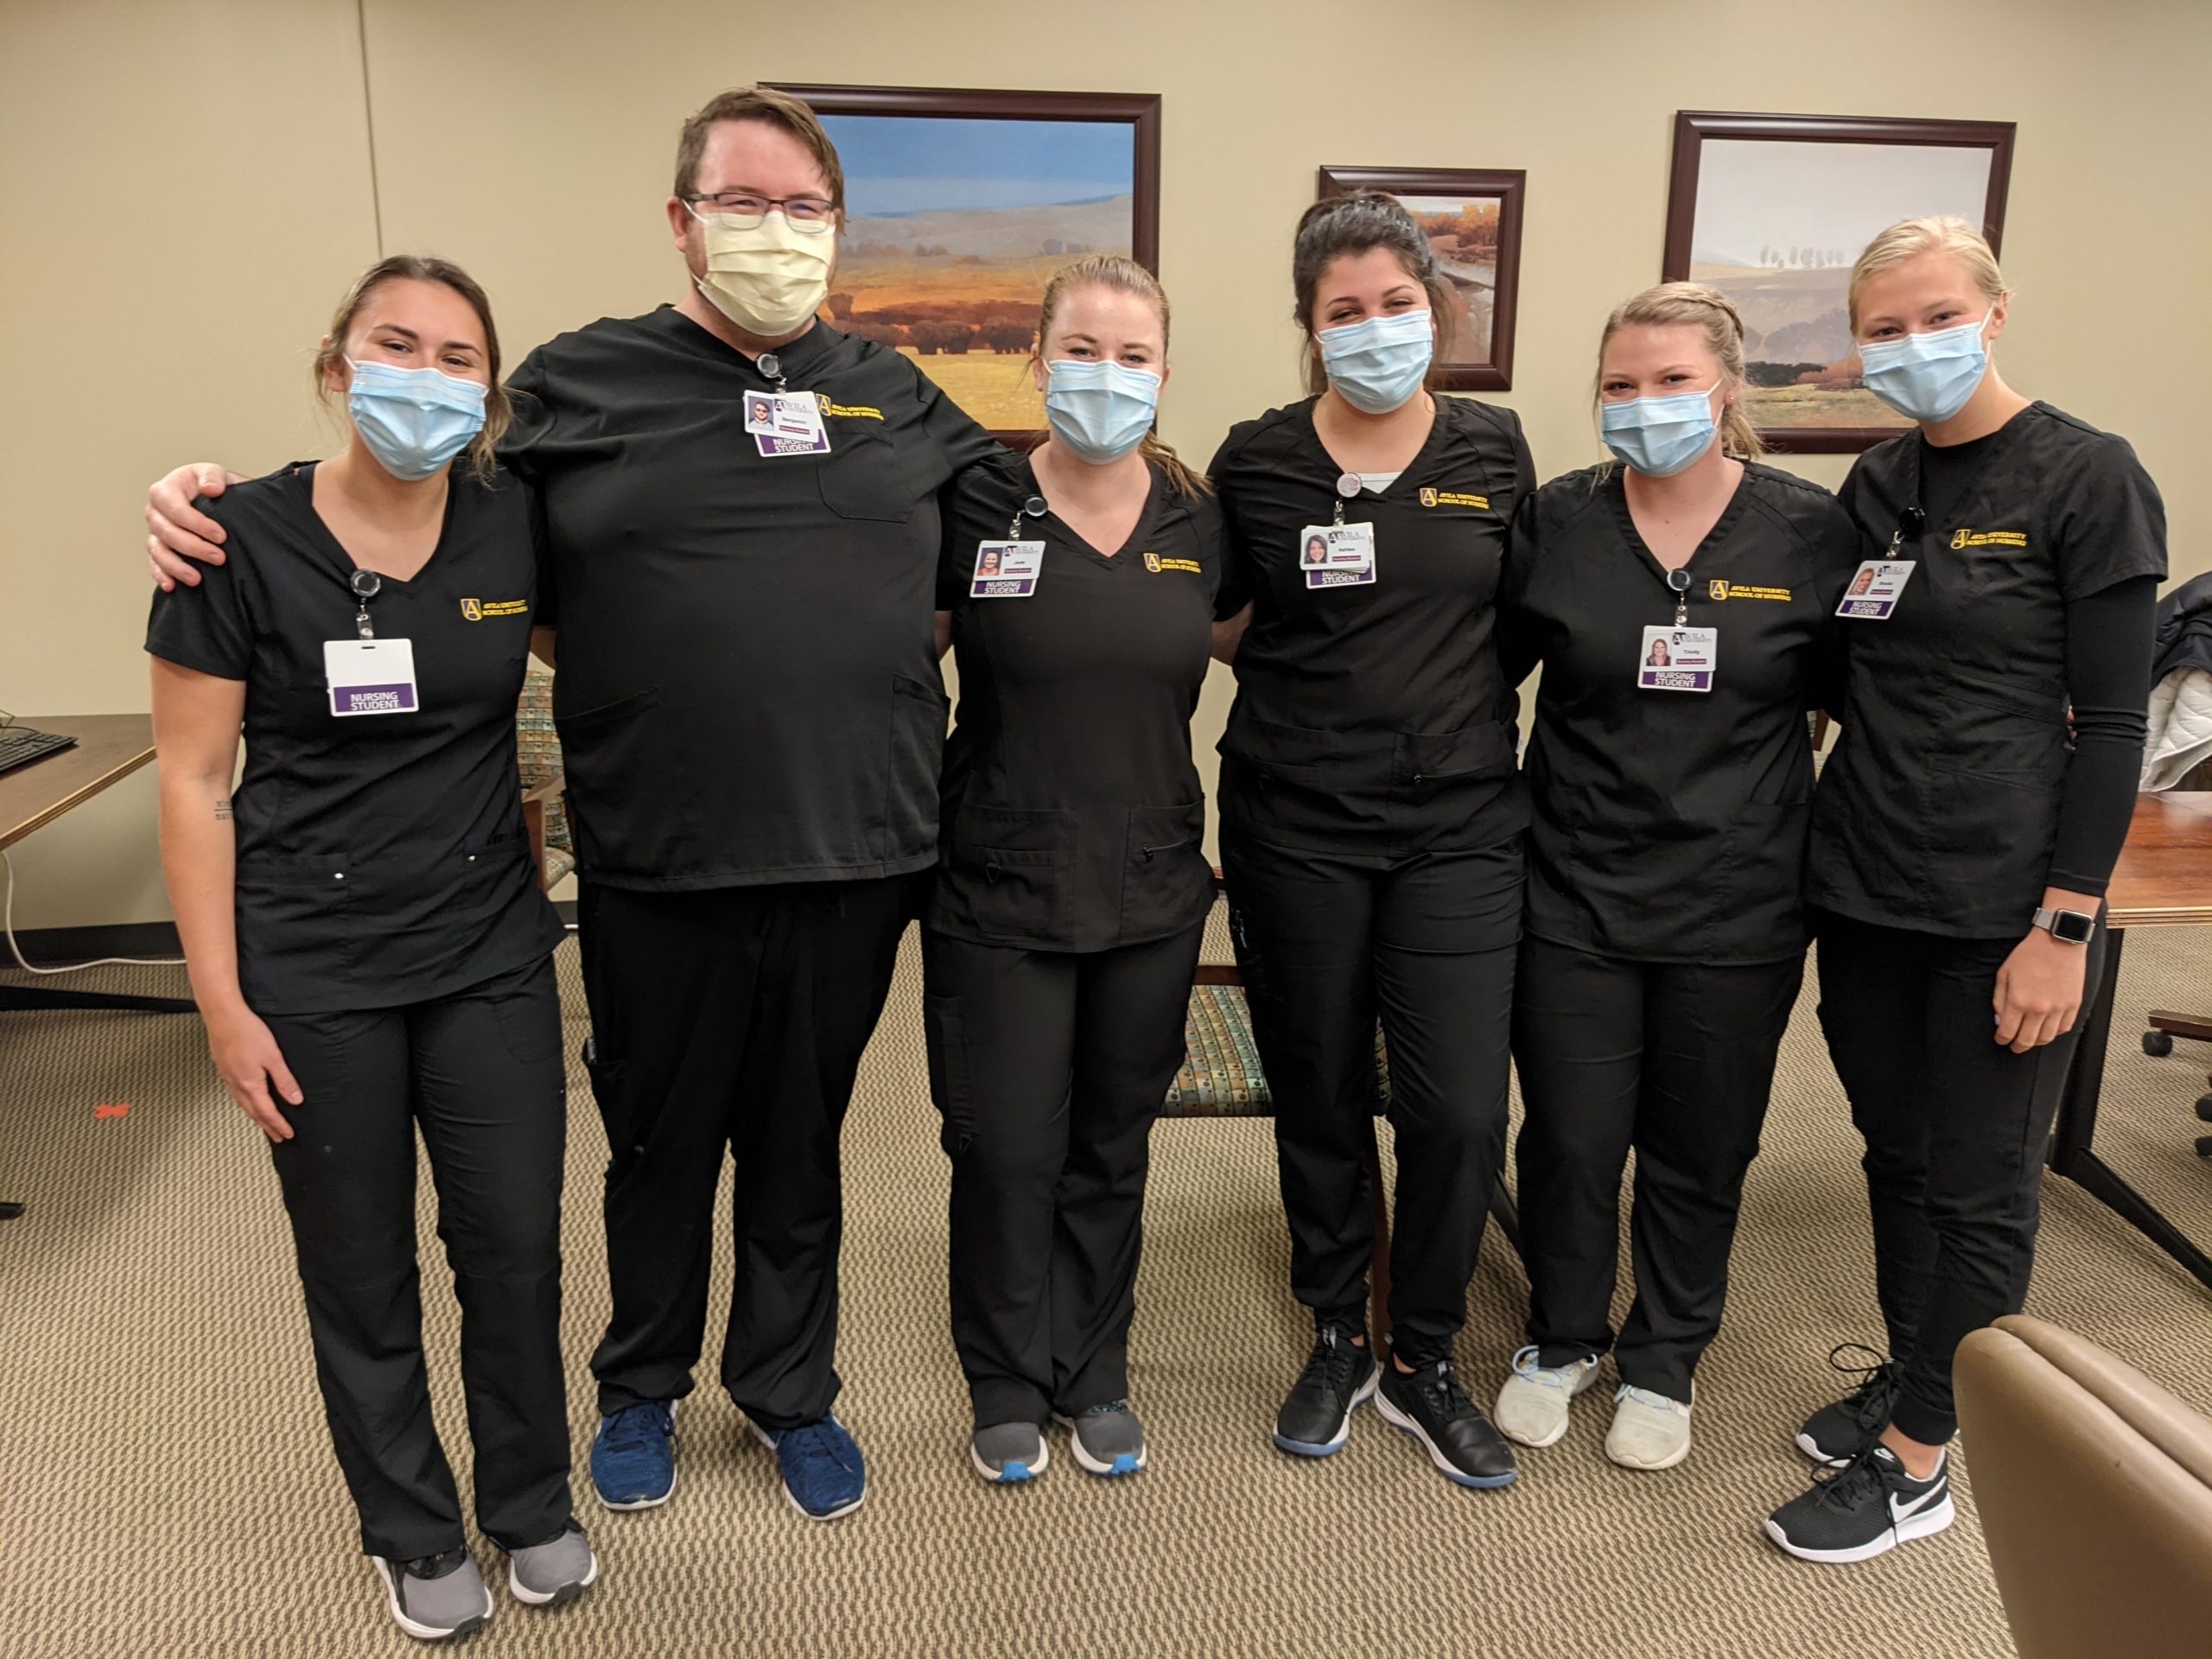 A group of nursing students in scrubs posing in room.